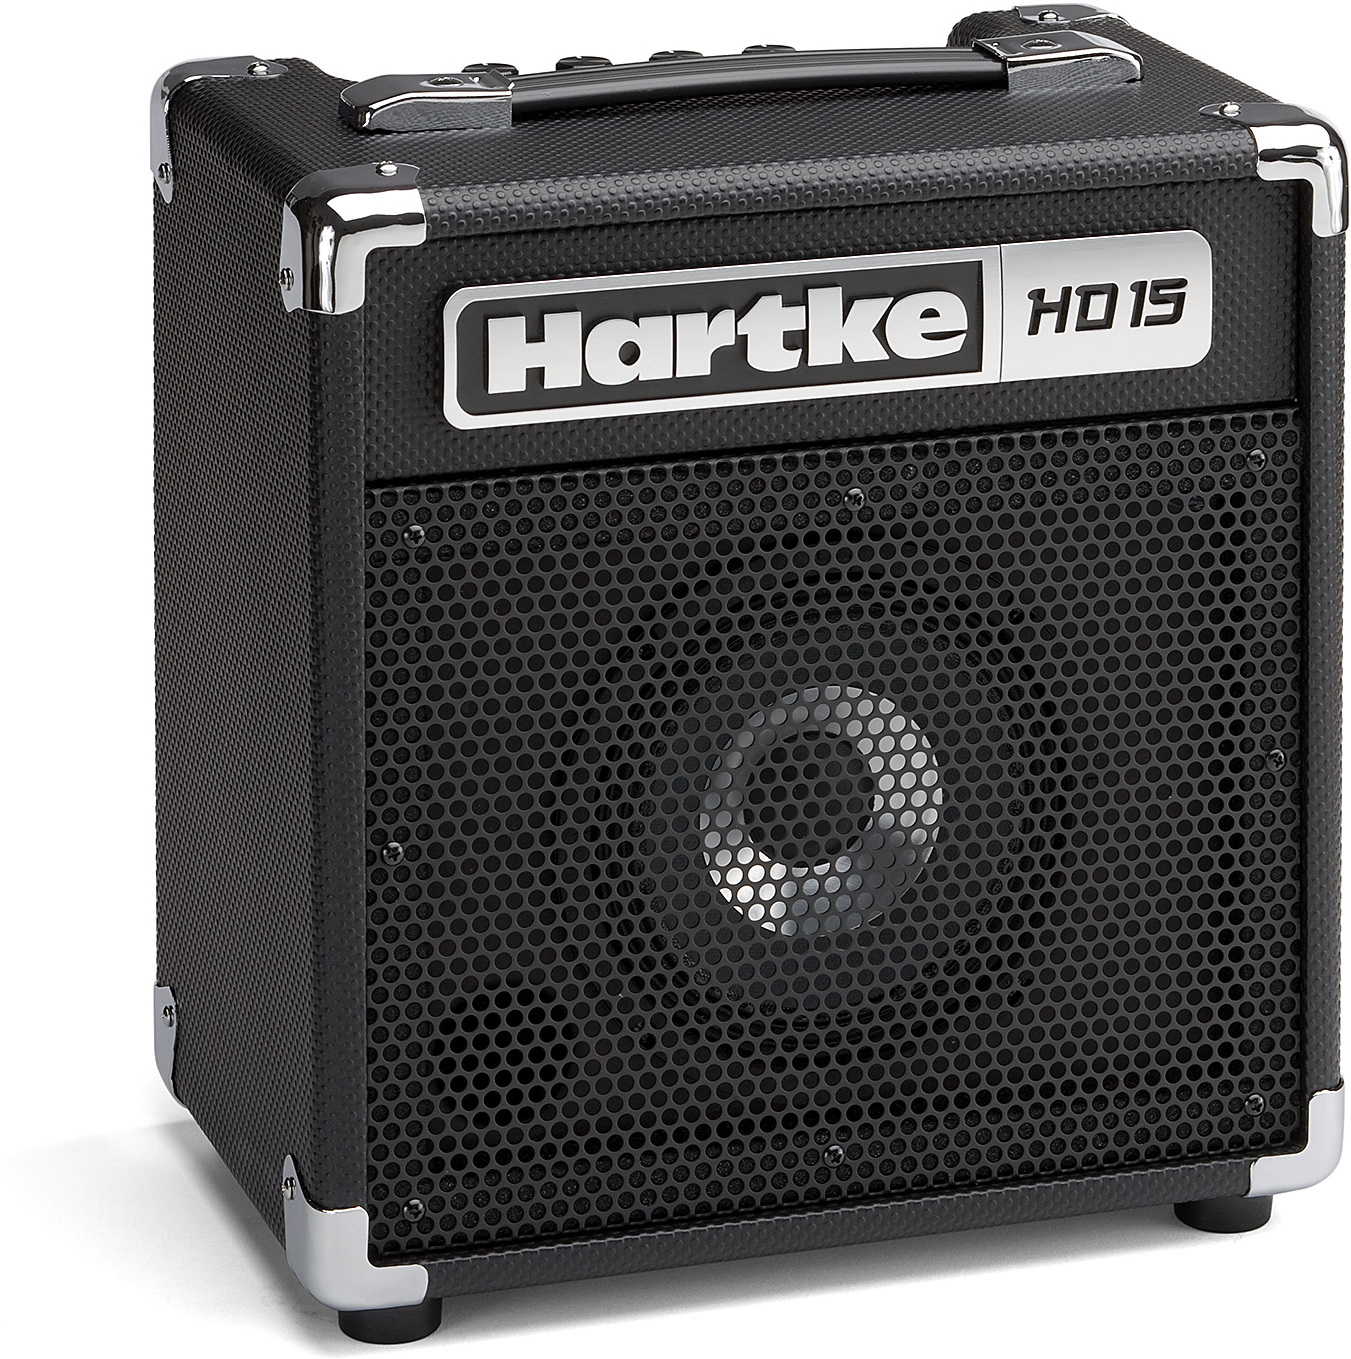 Hartke Hd15 Combo 6.5 - Combo amplificador para bajo - Main picture